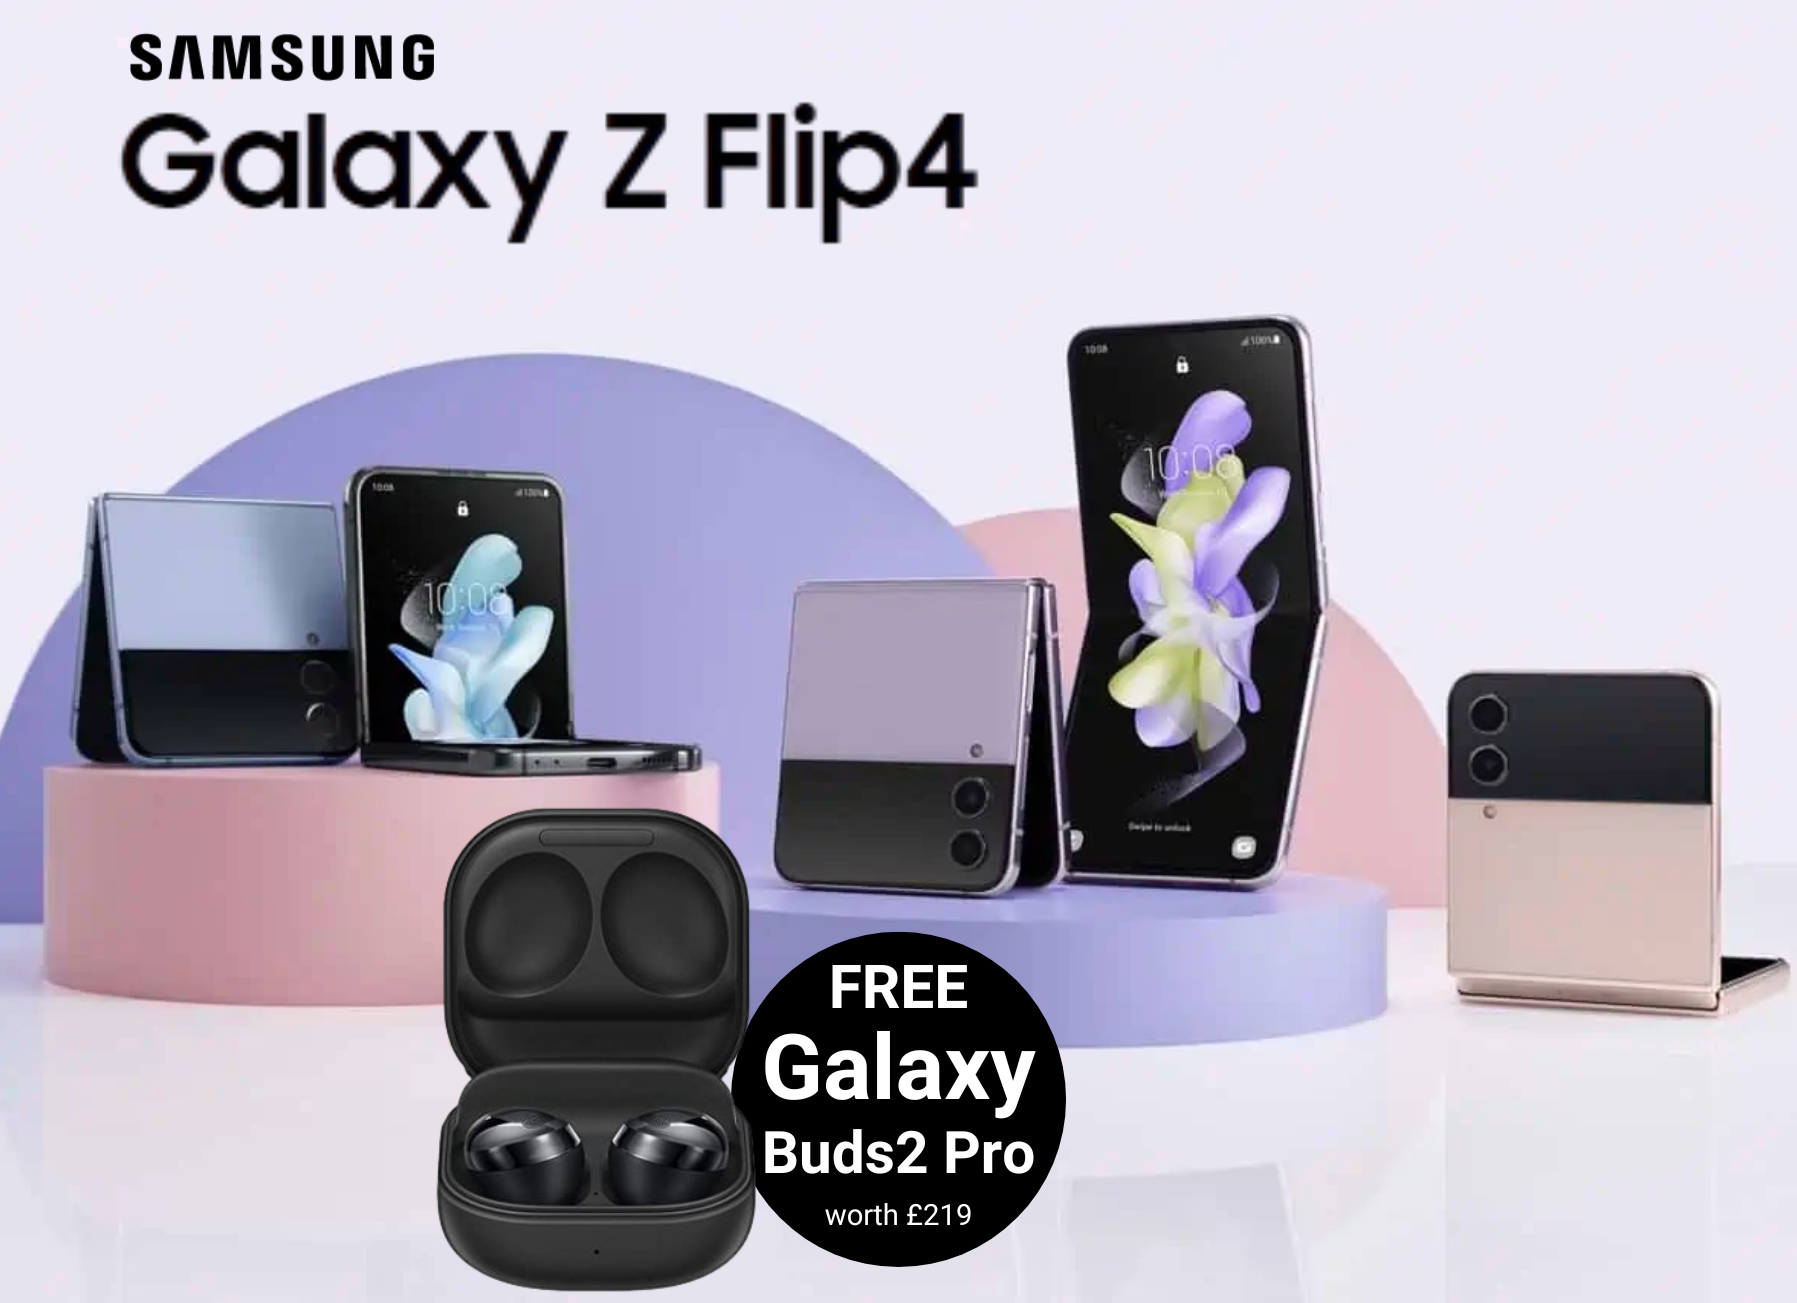 Samsung Z Flip4 Deals with Free Galaxy Buds 2 Pro